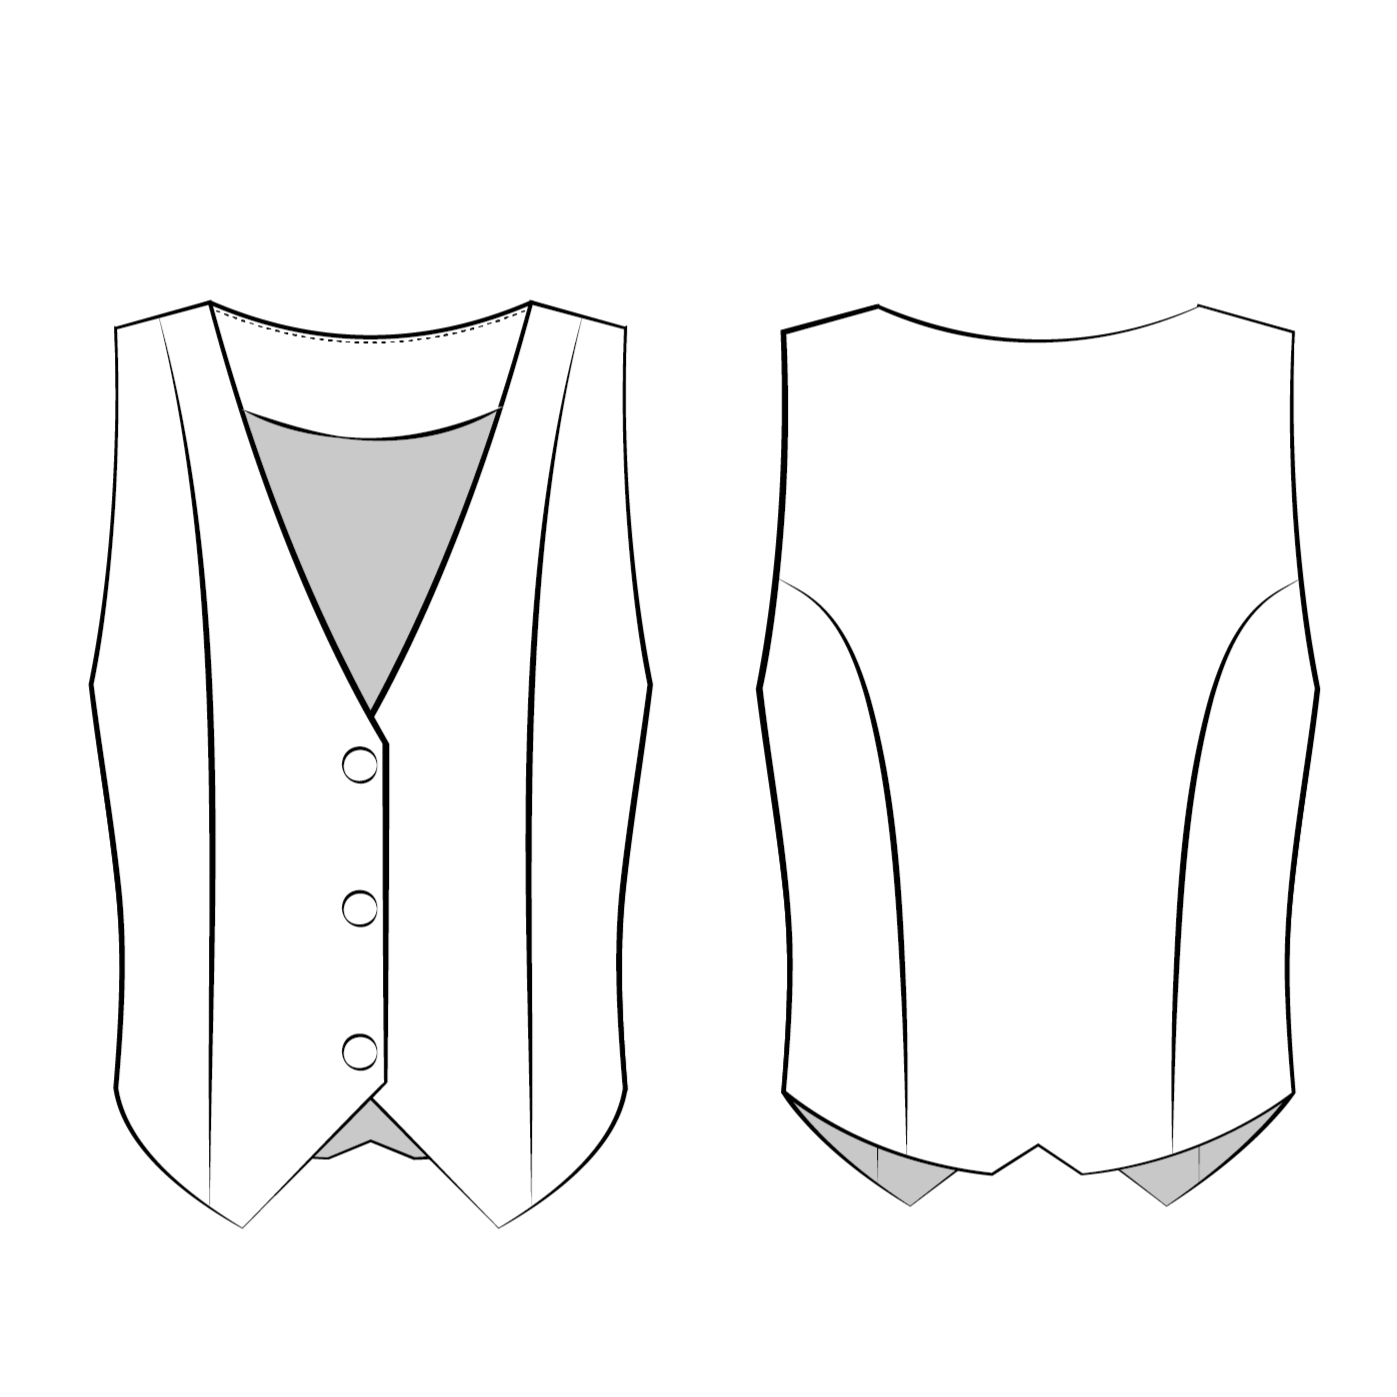 Fashion illustration sketch of the waistcoat vest.